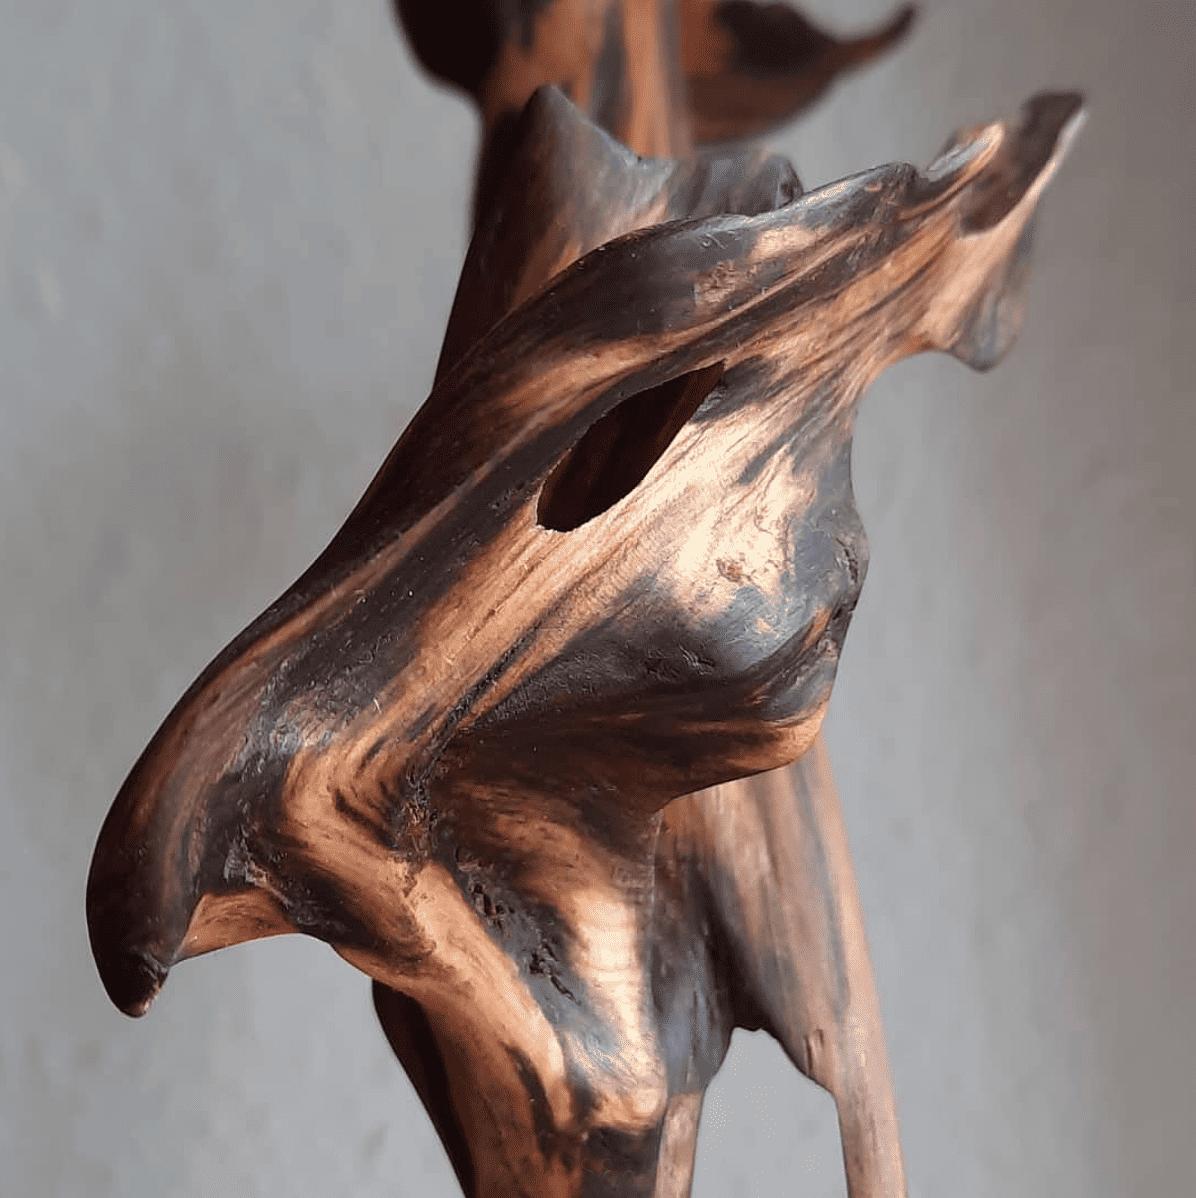 Clemens Voigt "Dragon Tree" (2020). Wooden sculpture. Wild wood. Pine tree roots. 18 cm